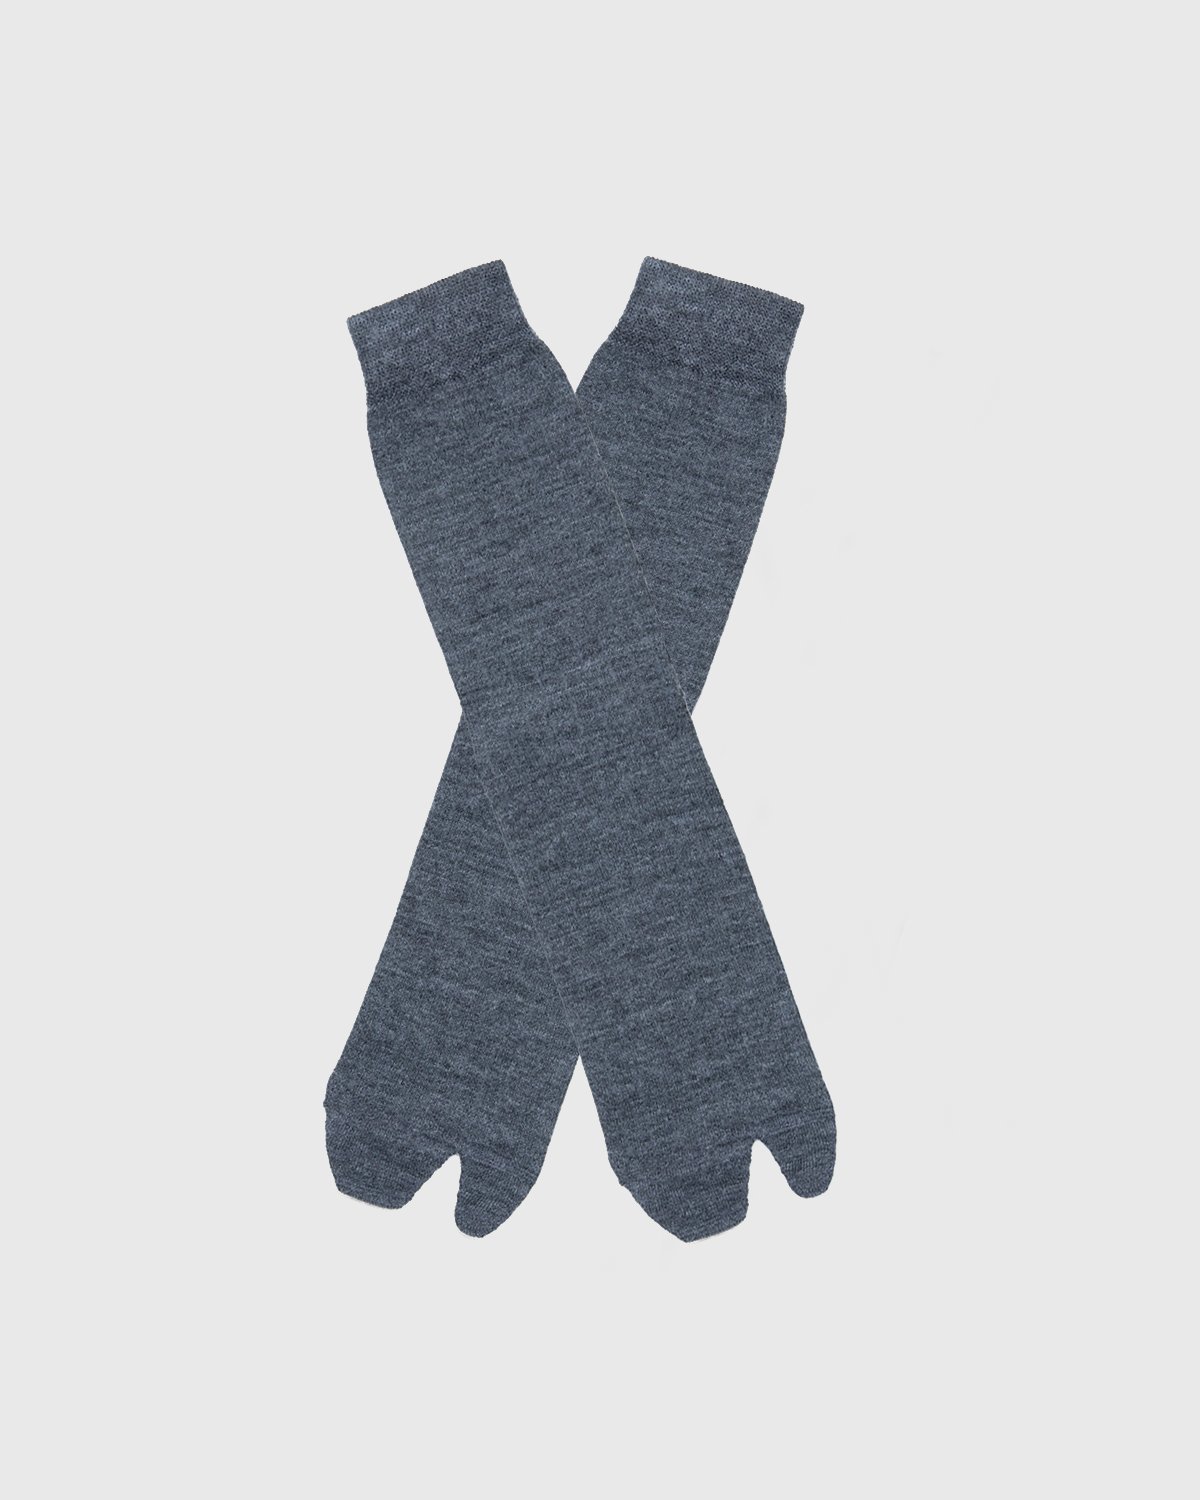 Maison Margiela - Tabi Socks Grey - Accessories - Grey - Image 2